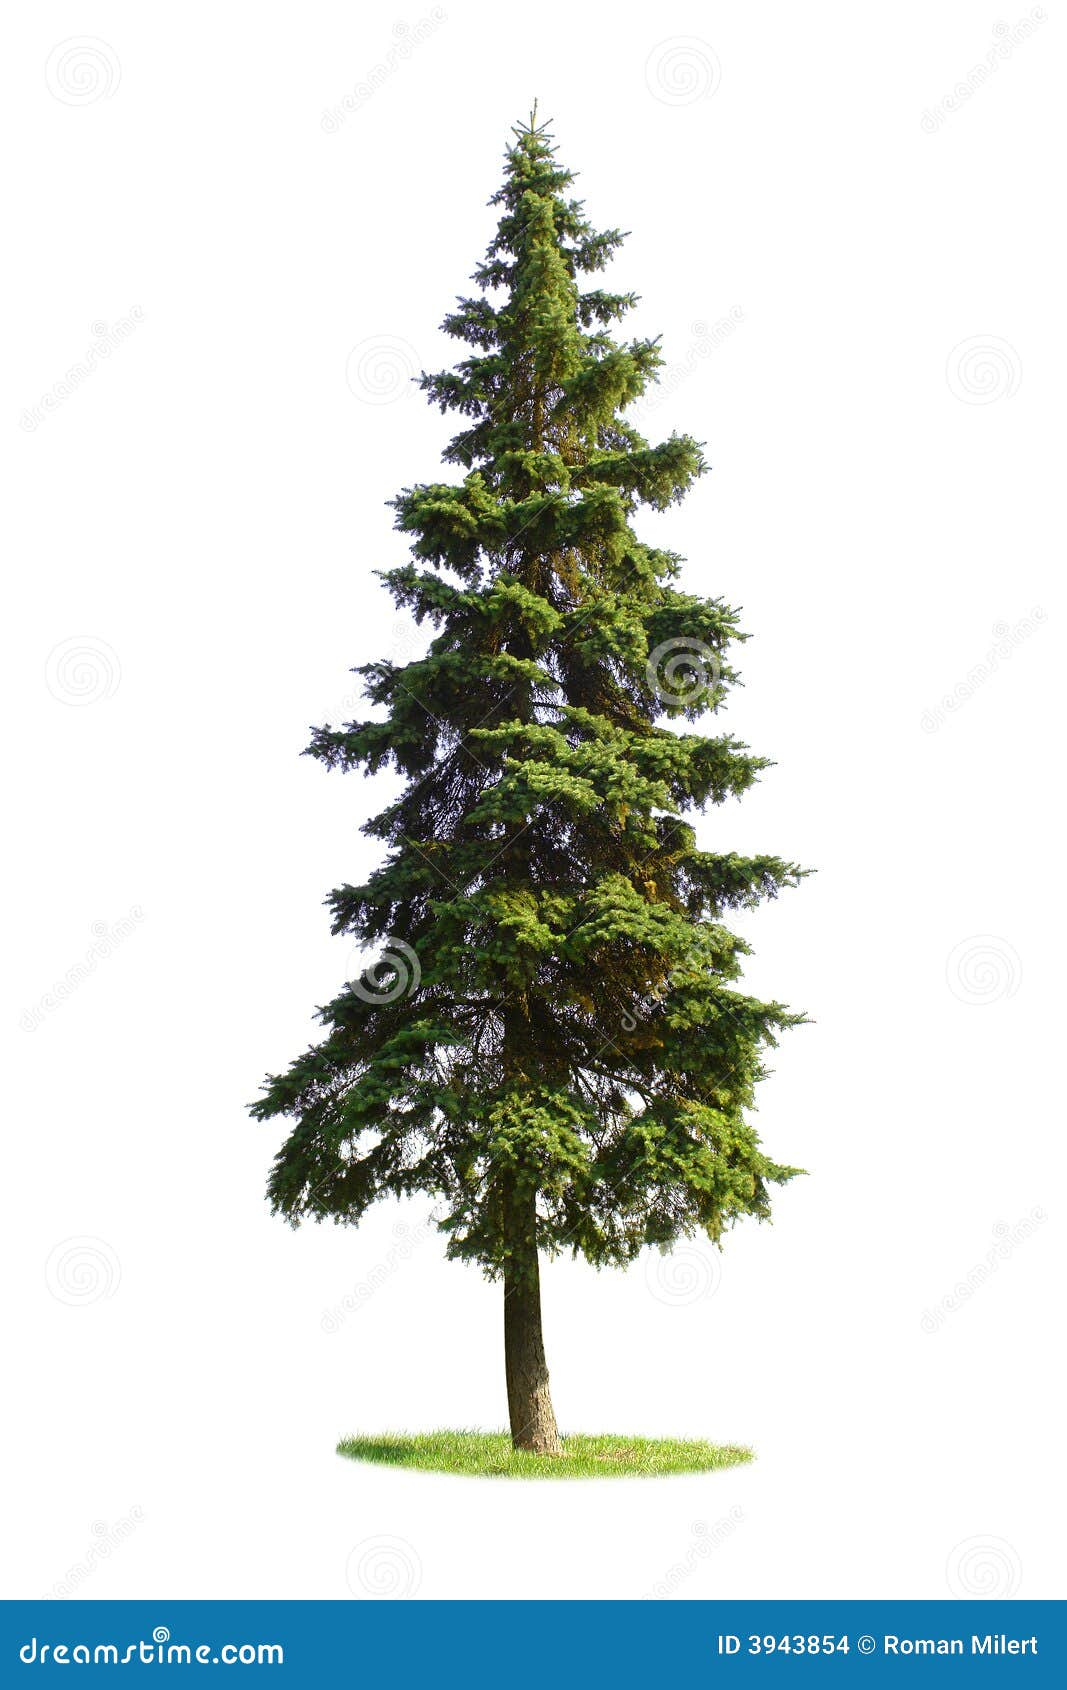 clipart spruce tree - photo #6